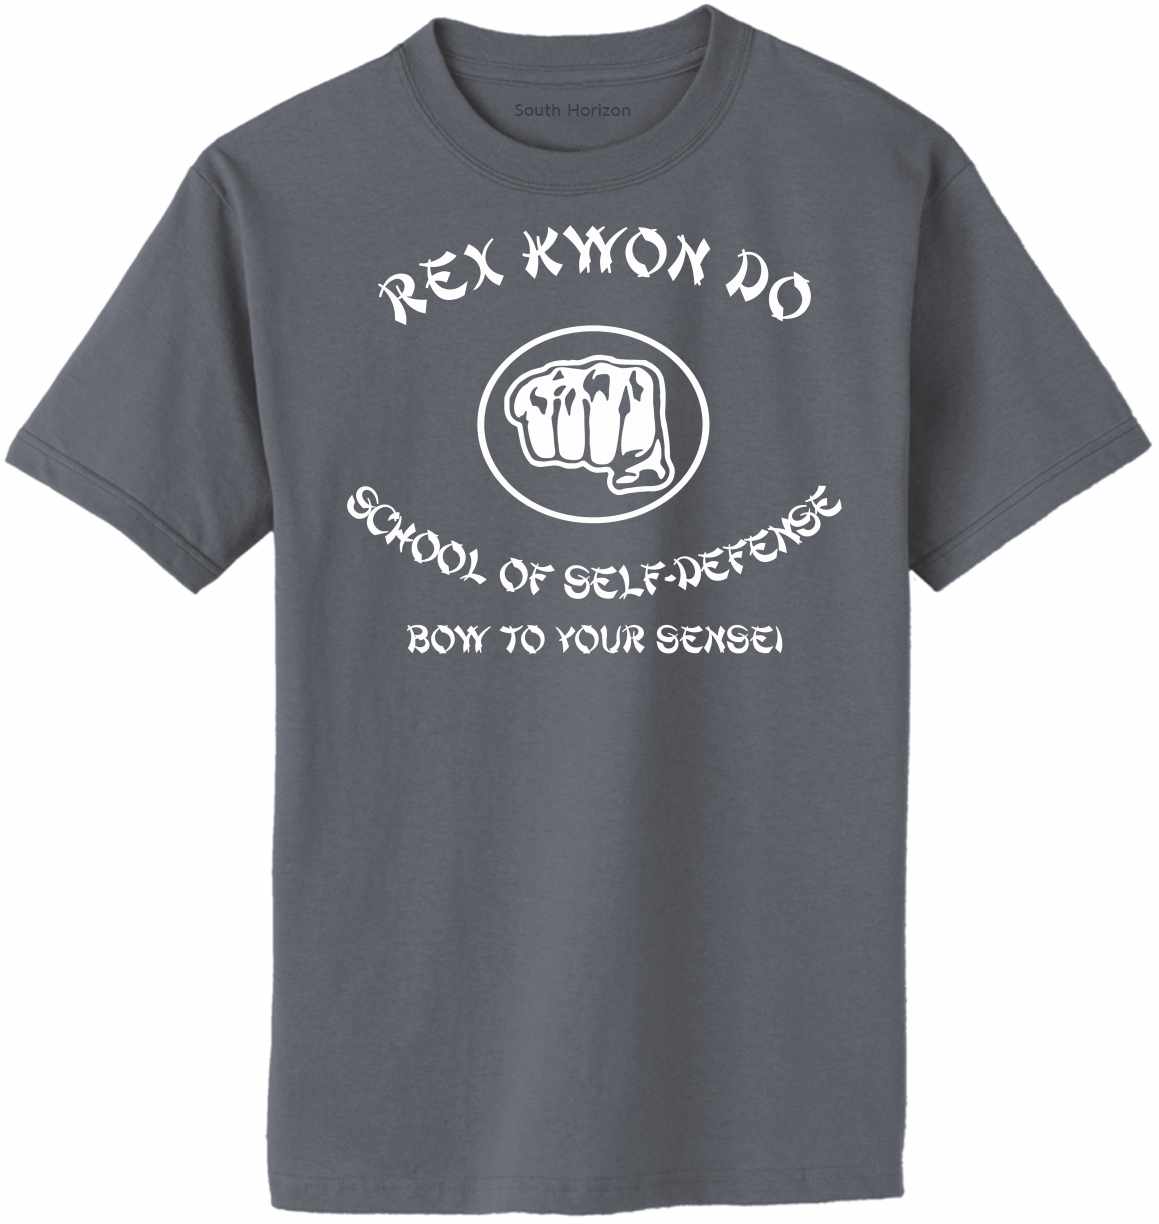 REX KWON DO SCHOOL OF SELF DEFENSE Adult T-Shirt (#386-1)